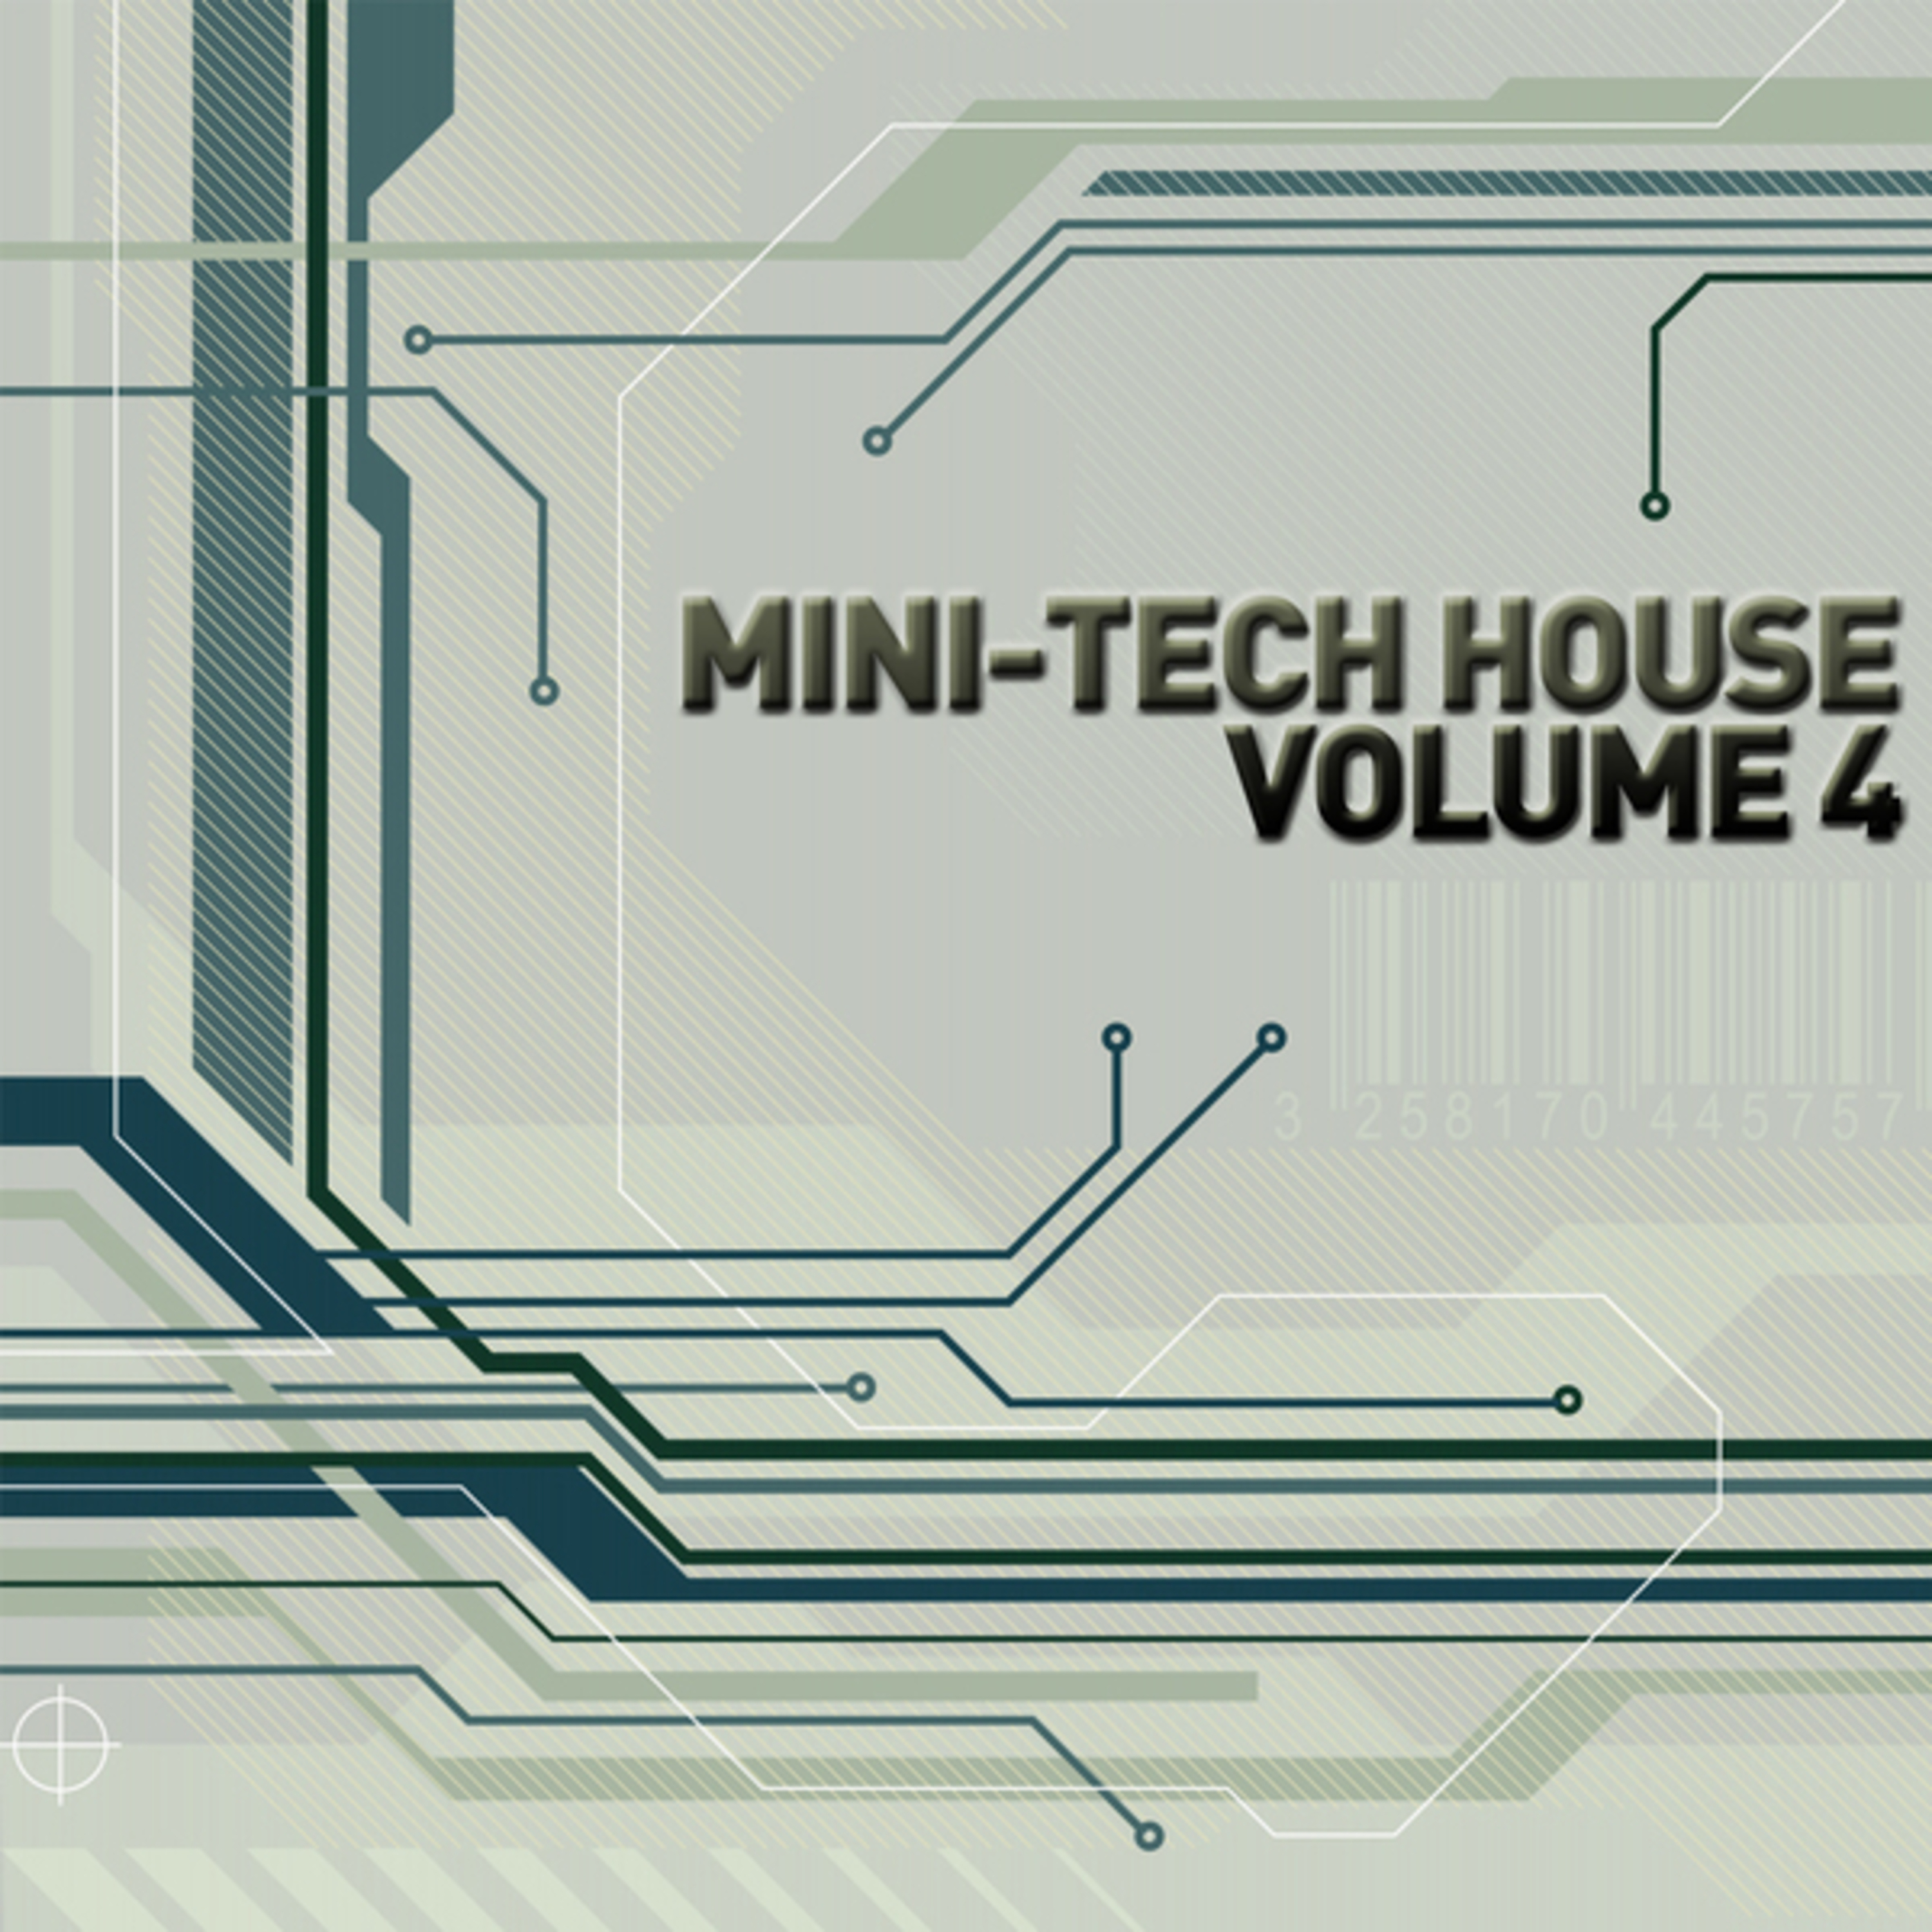 Mini-Tech House - Volume 4